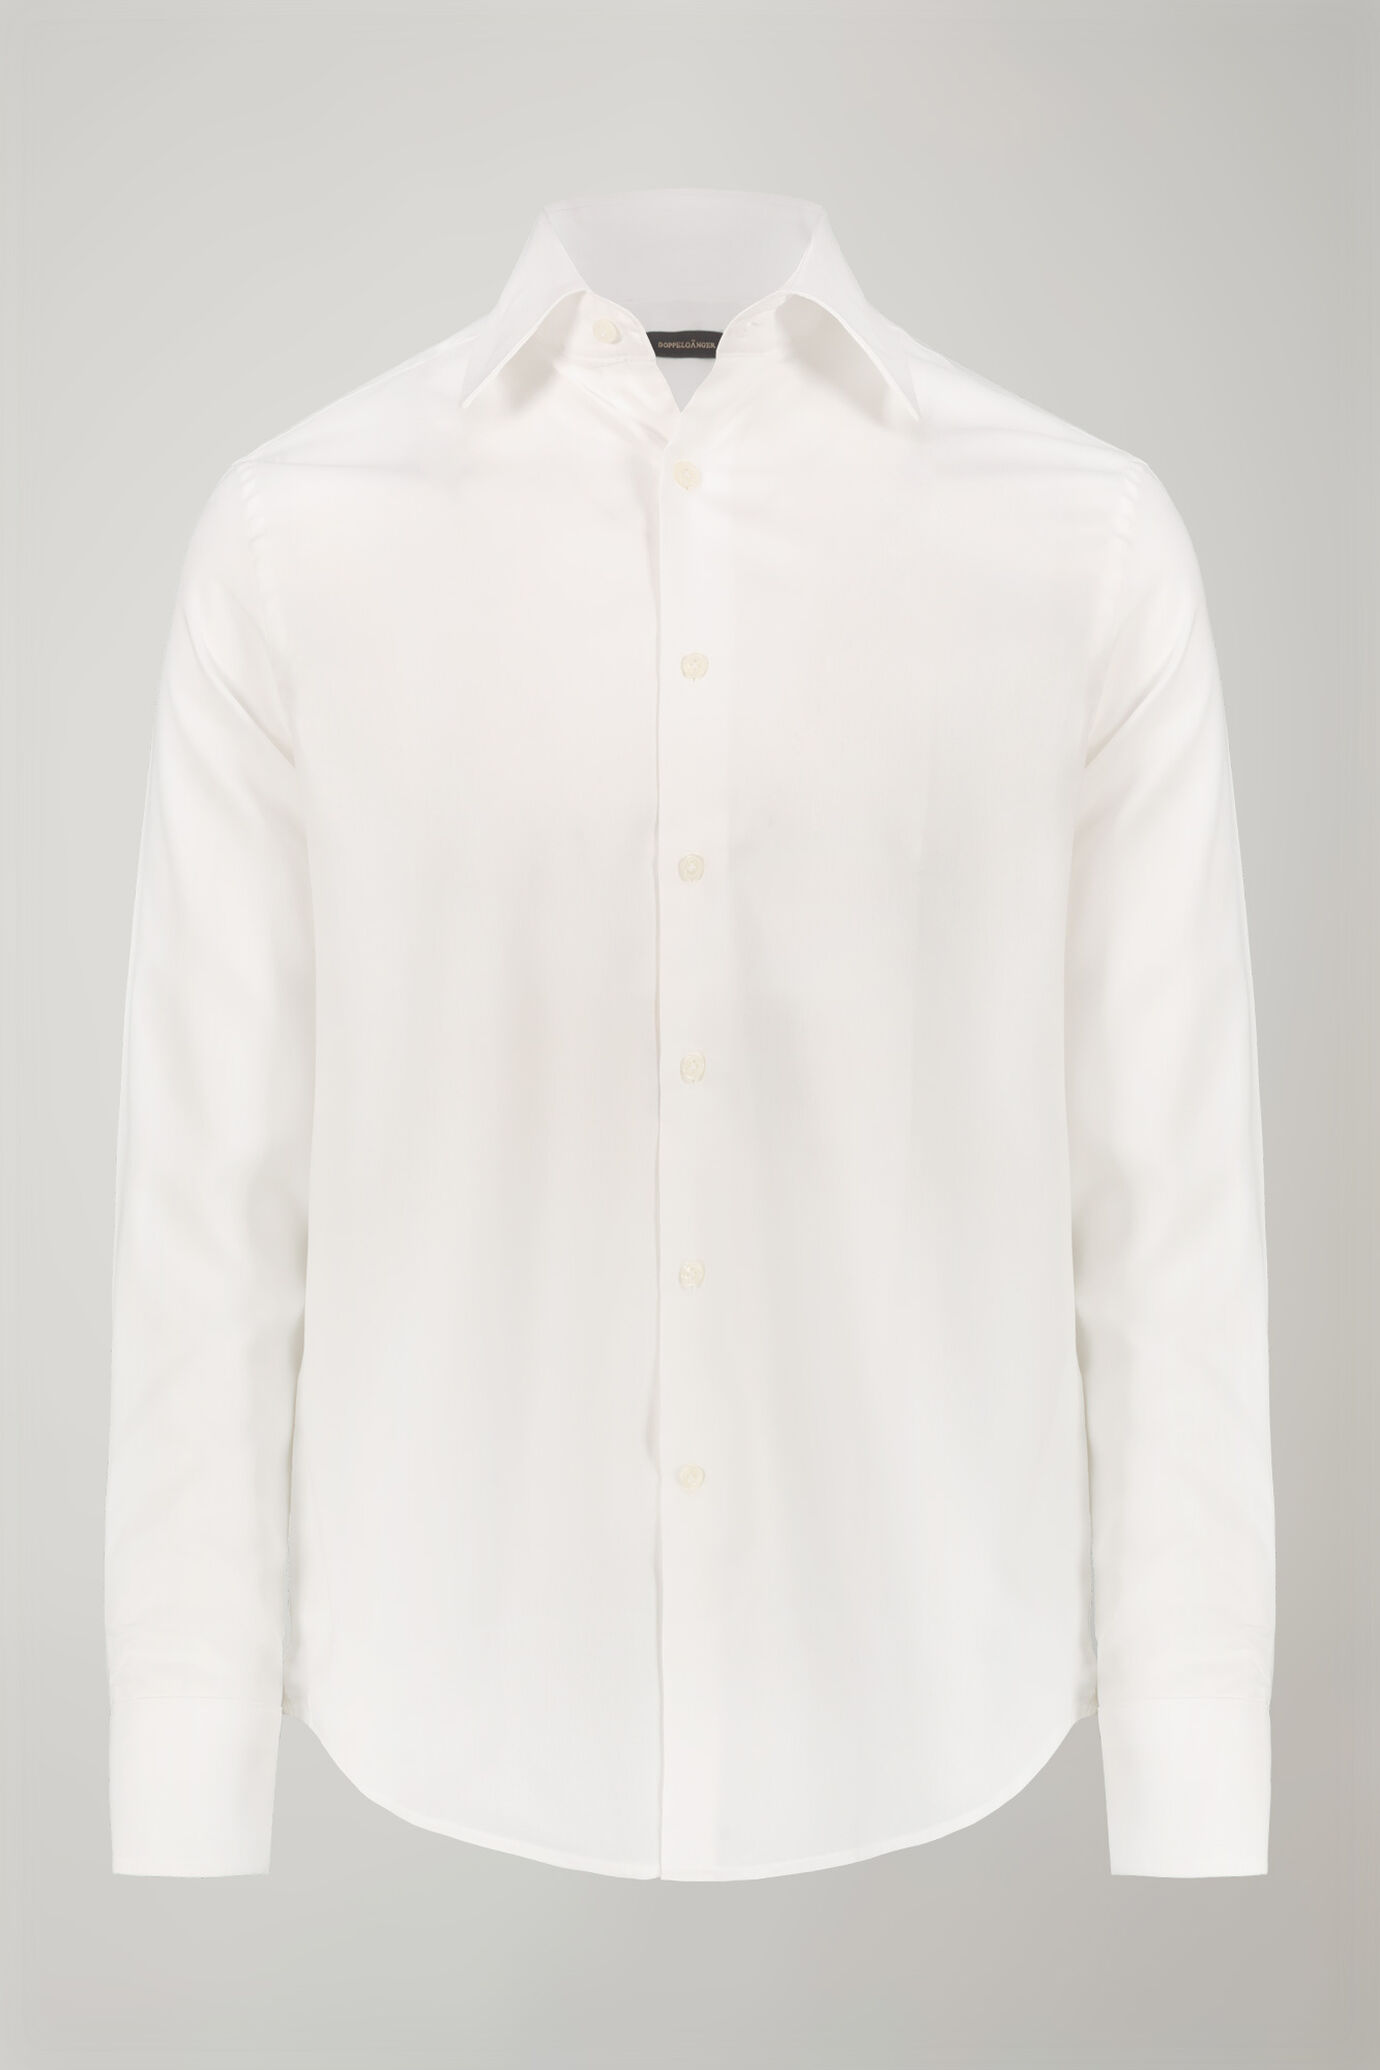 Men's shirt classic collar 100% cotton pinpoint fabric plain regualr fit image number 5